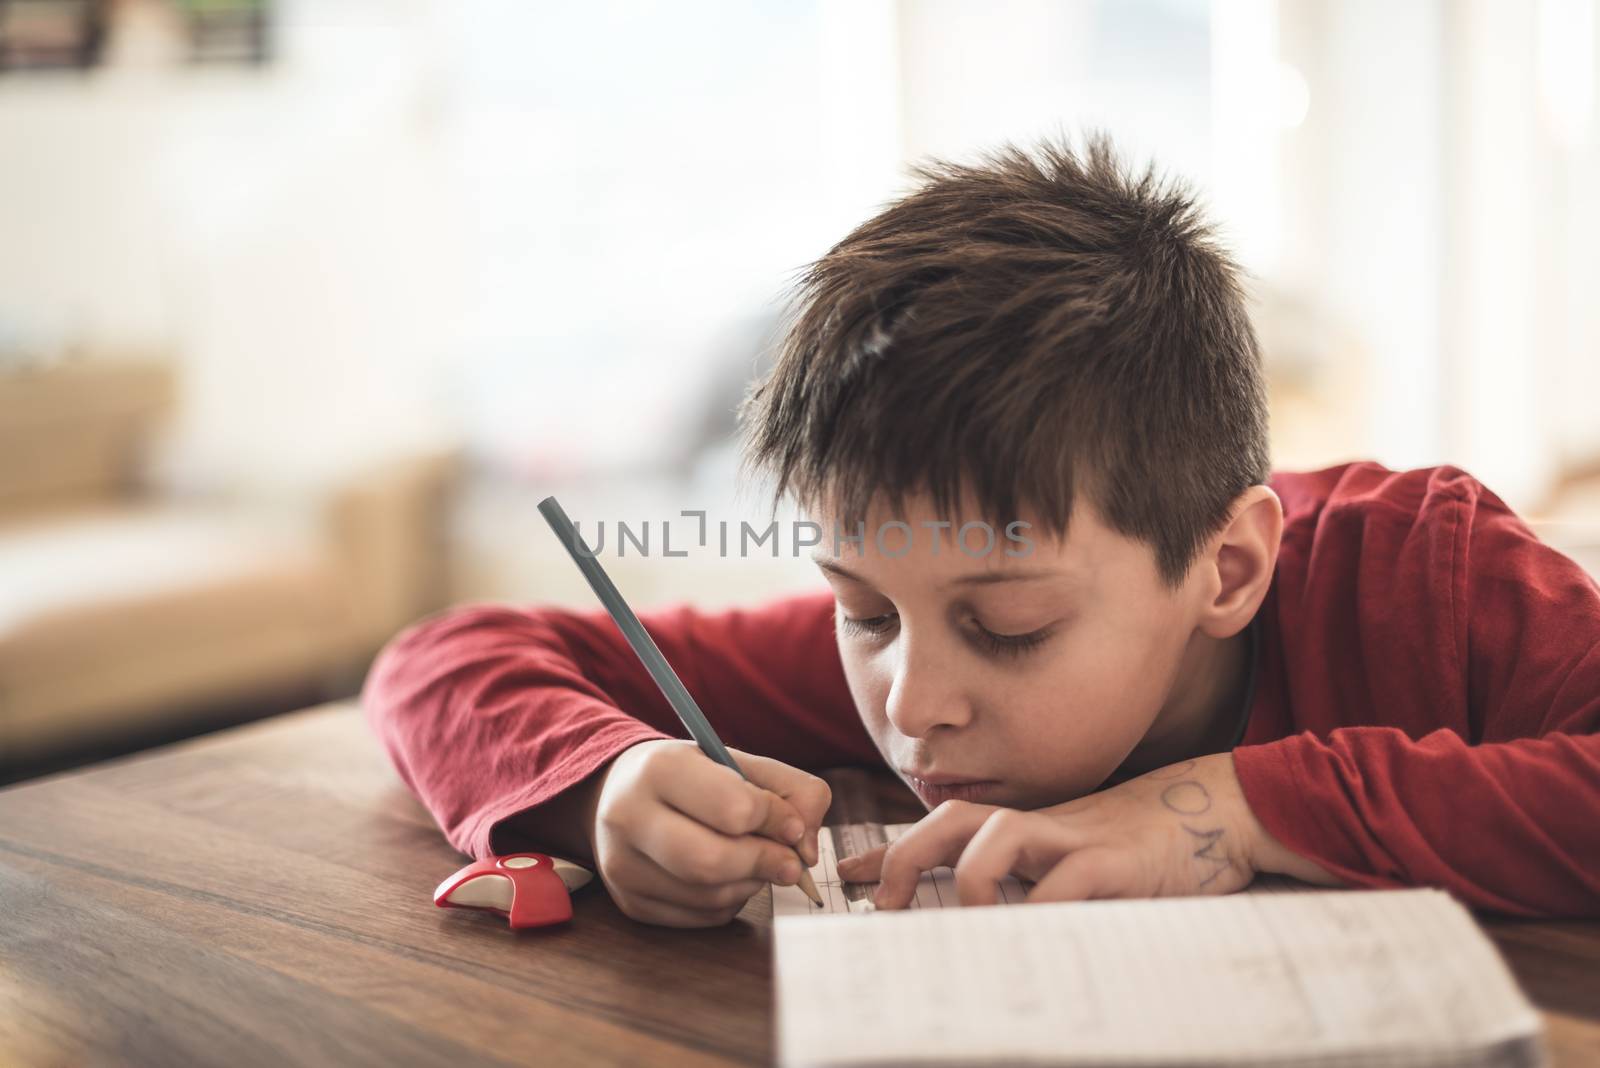 Boy doing homework reluctantly by gorgev